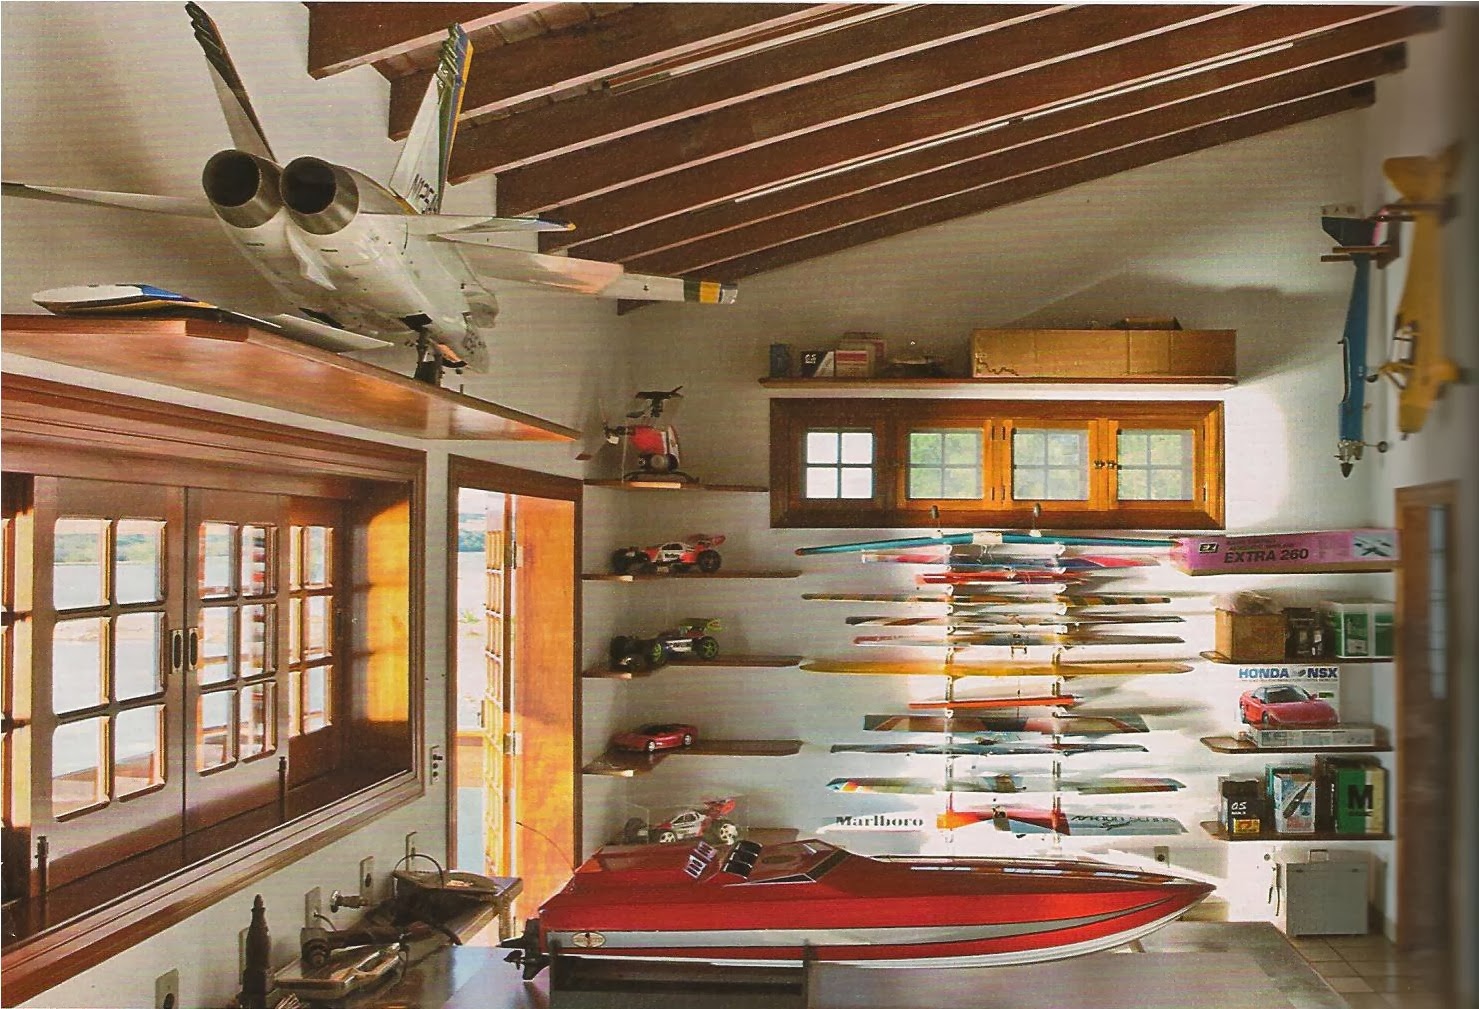 A room full of model planes, boats and cars at Senna's farm.